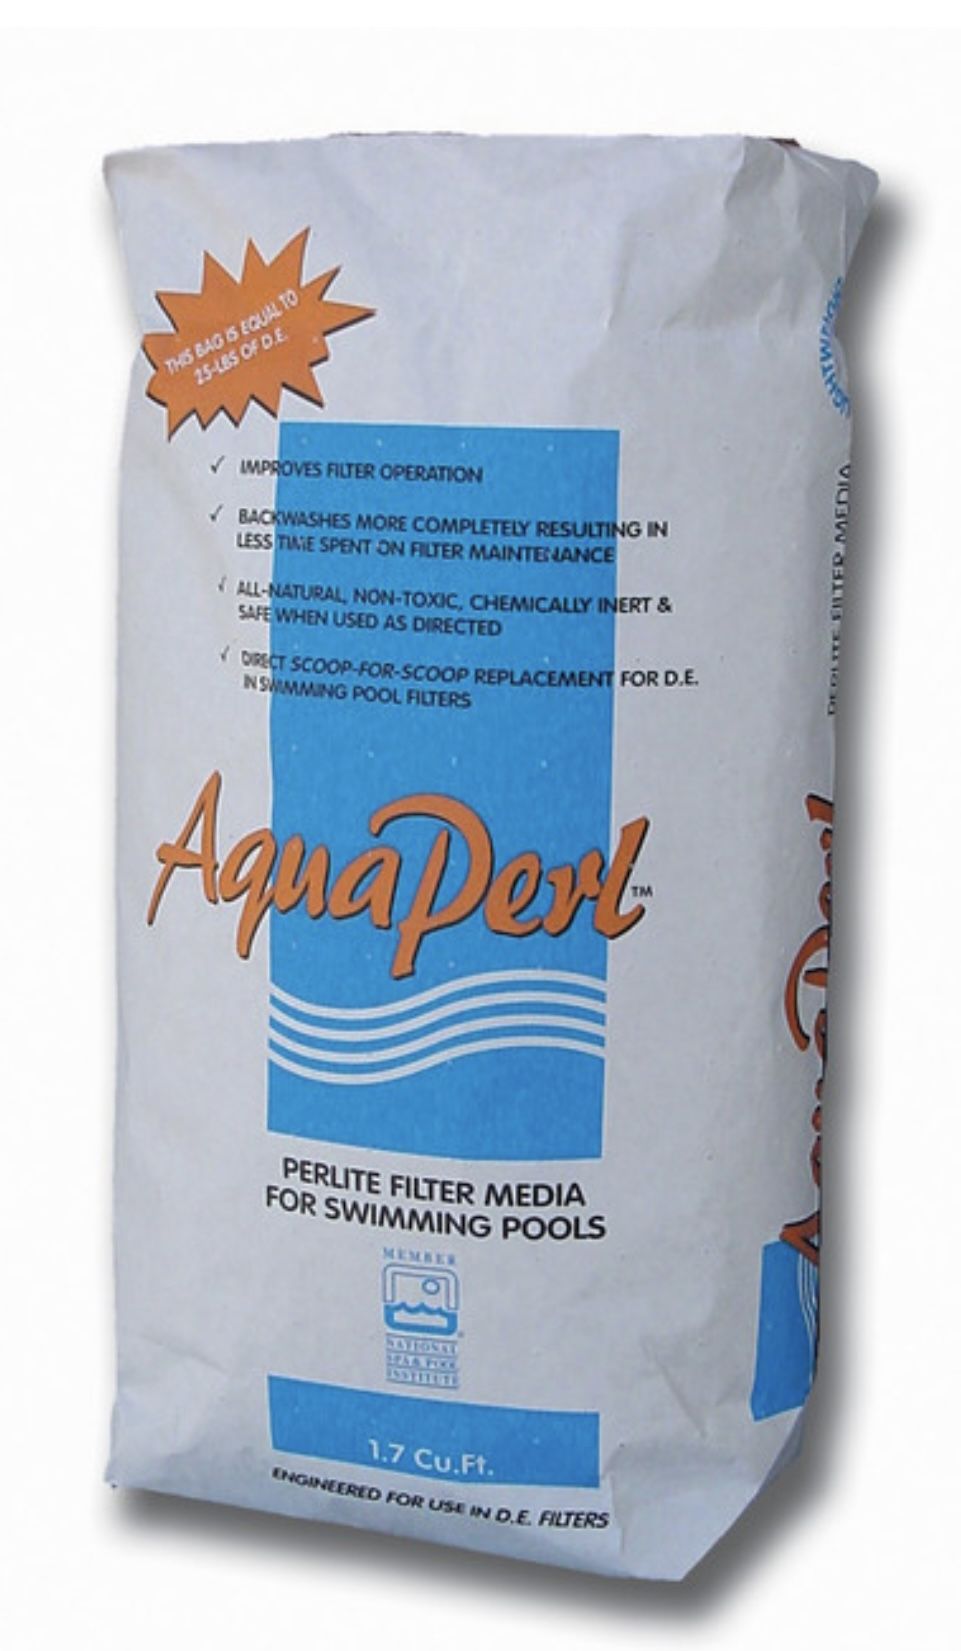 AquaPerl Perlite Filter Media For Swimming Pools